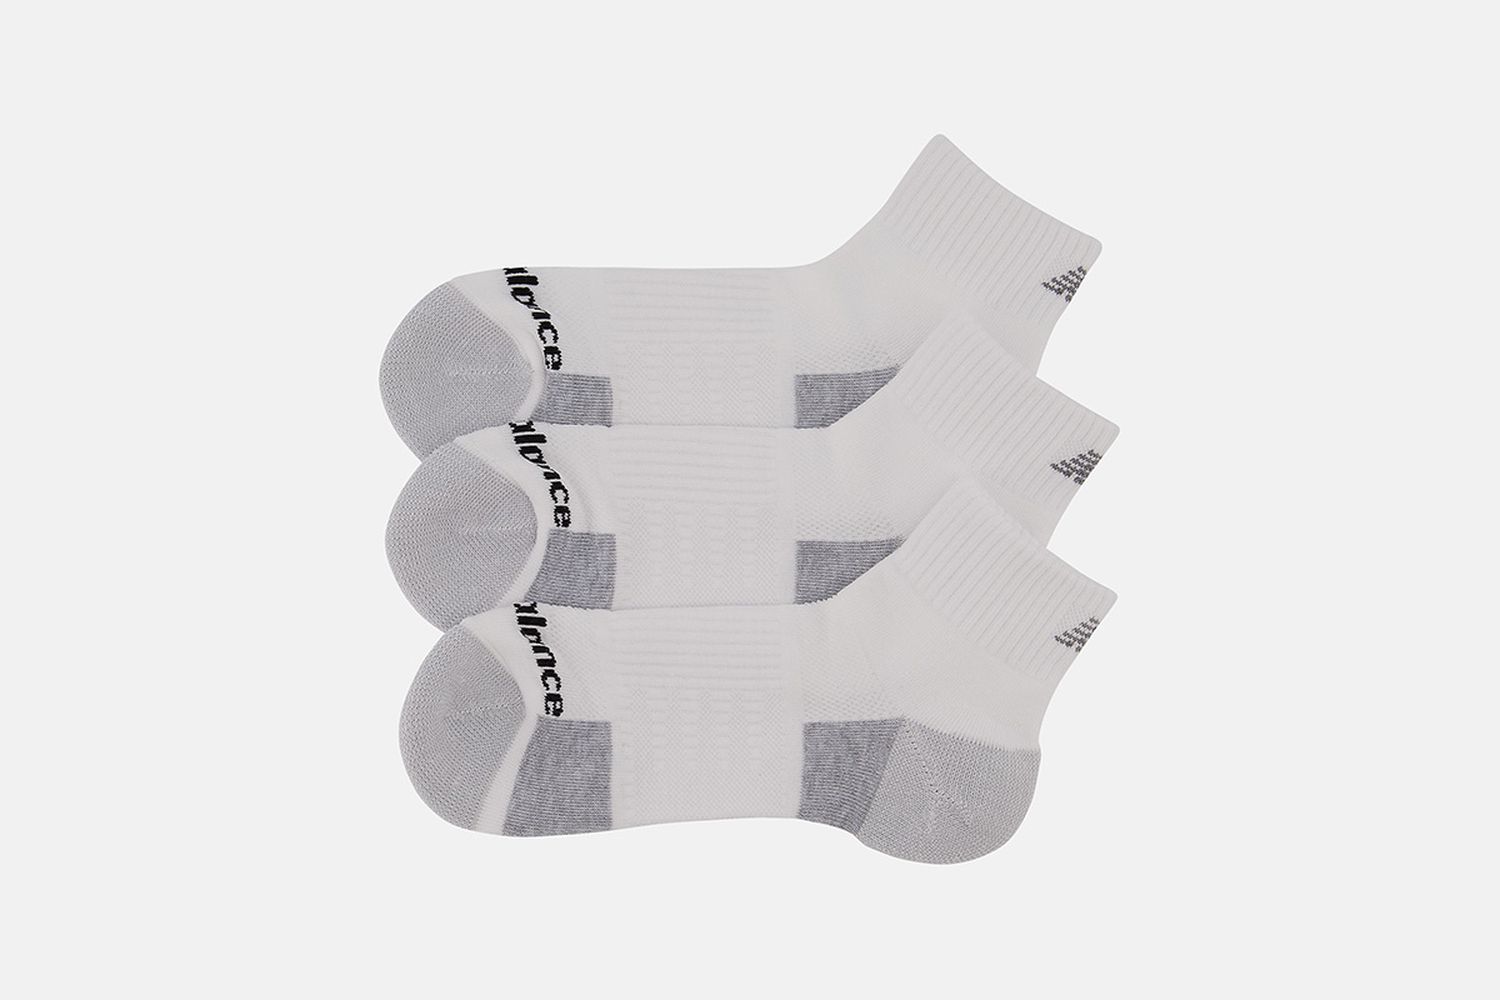 Cushioned Ankle Socks 6 Pack